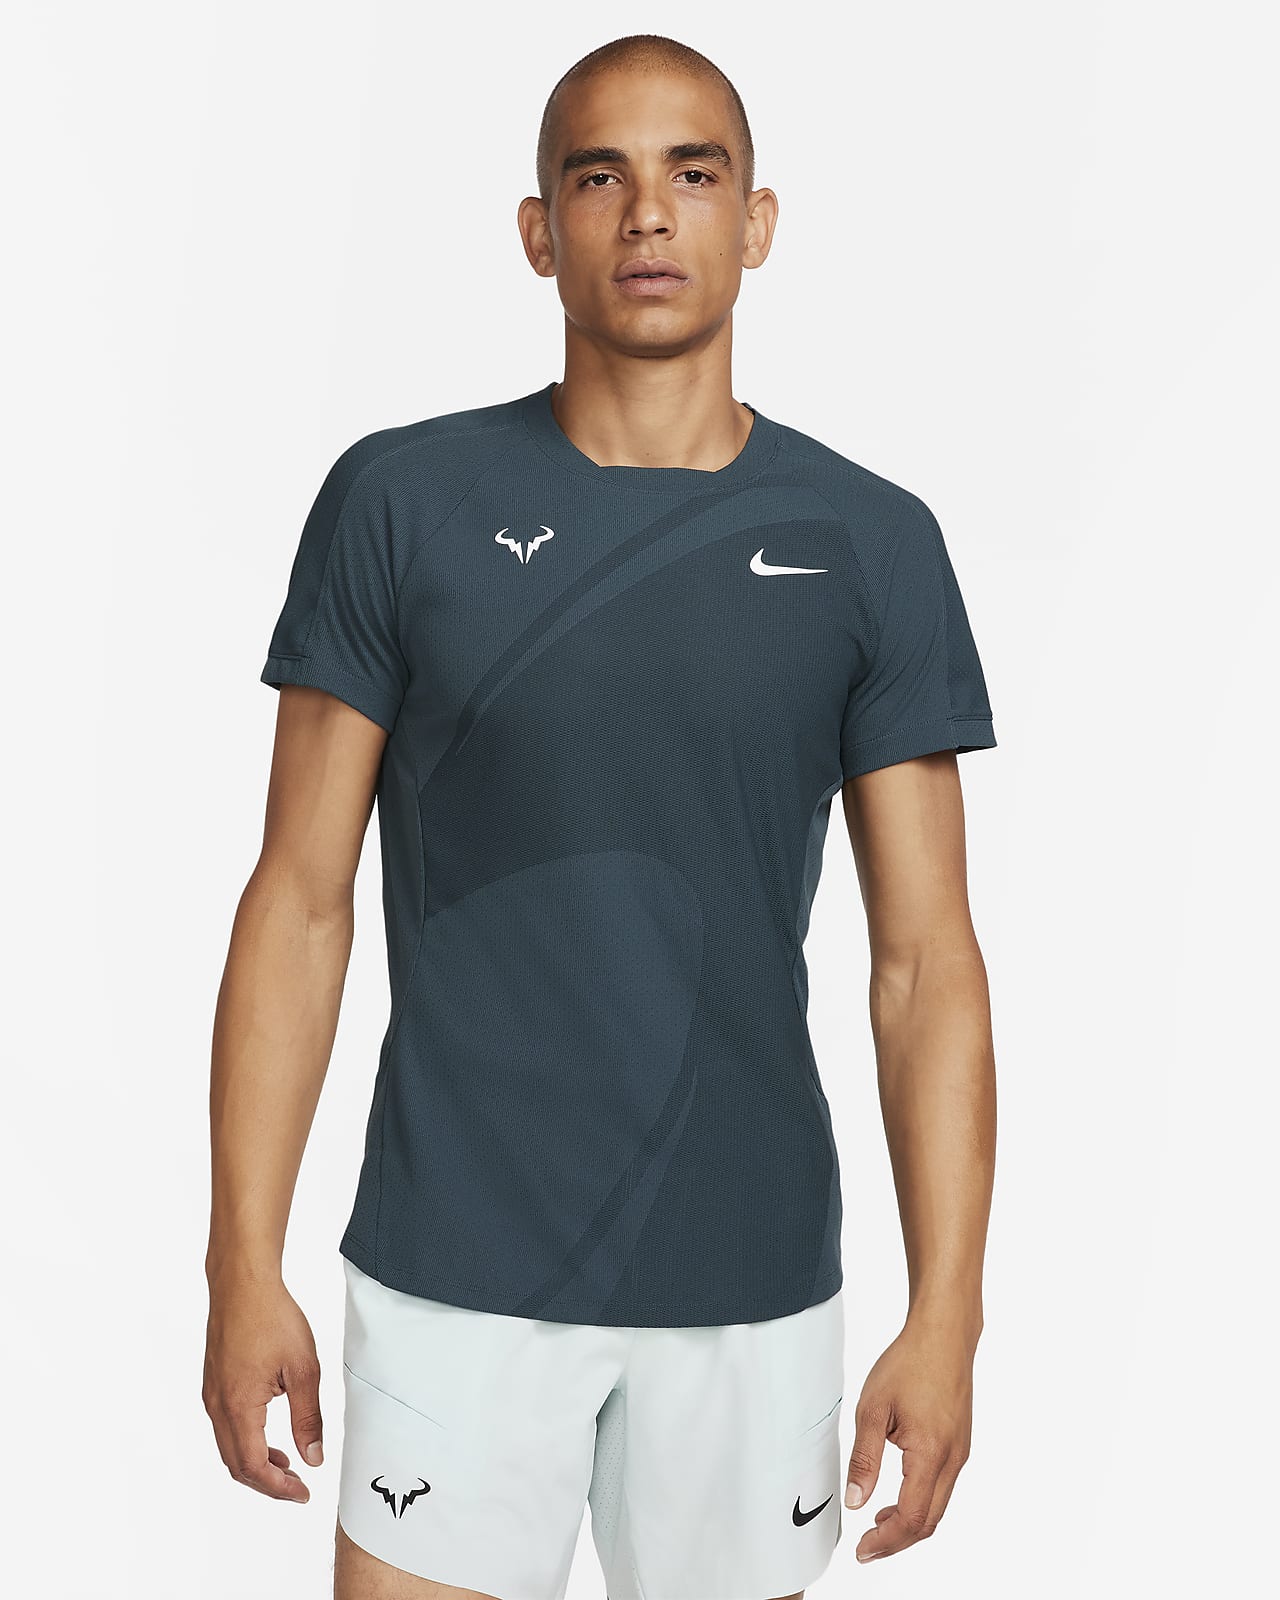 Playera de tenis manga corta para hombre Dri-FIT ADV Nike.com